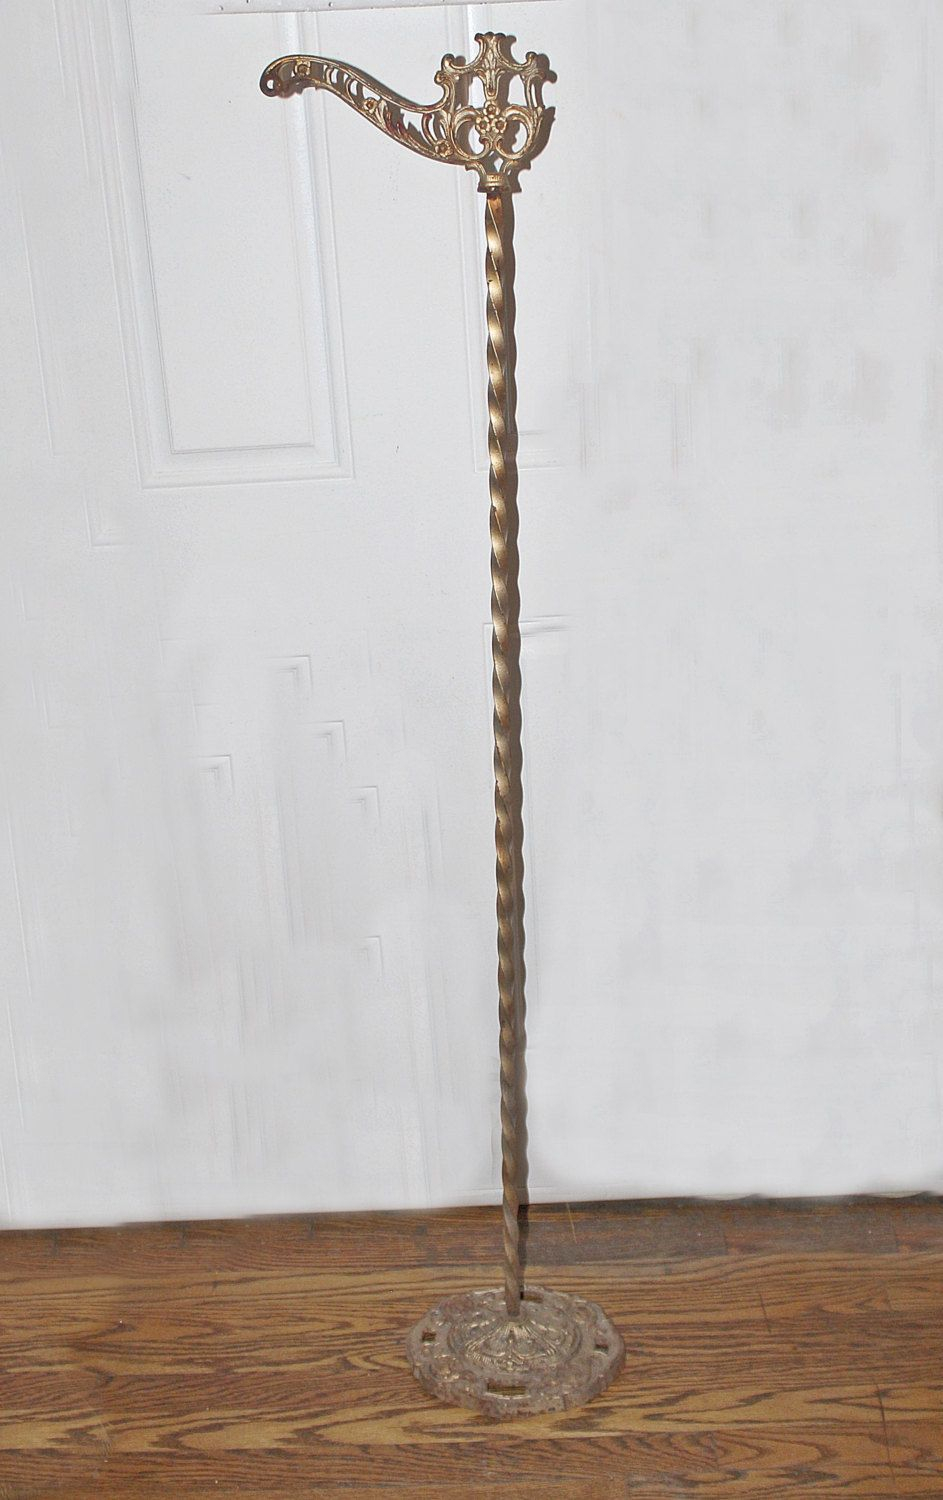 Antique Floor Lamp Stand Cast Iron Barley Twist Metal regarding dimensions 943 X 1500